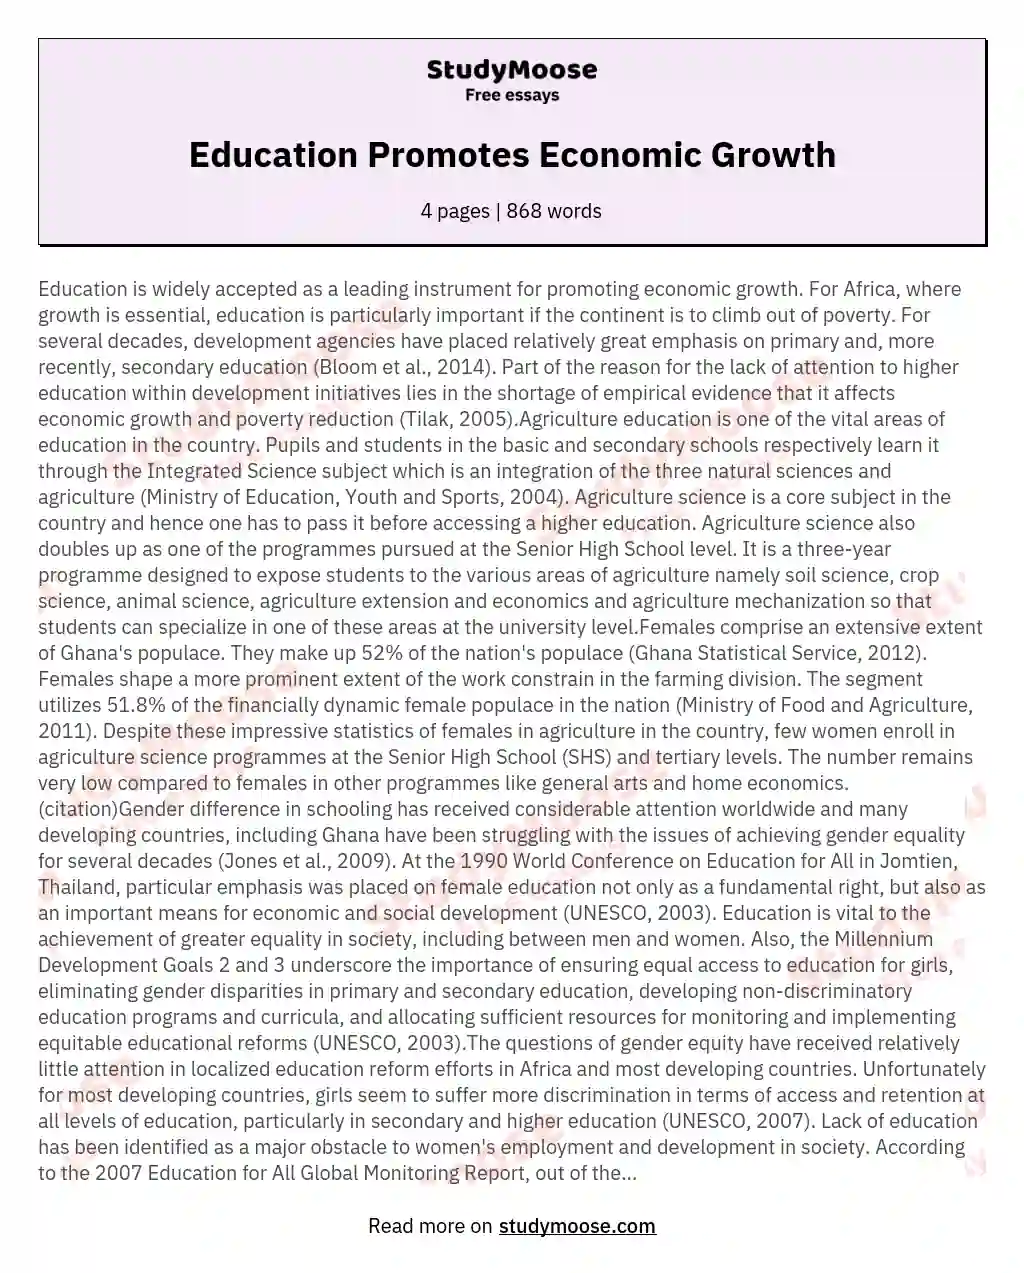 Education Promotes Economic Growth essay